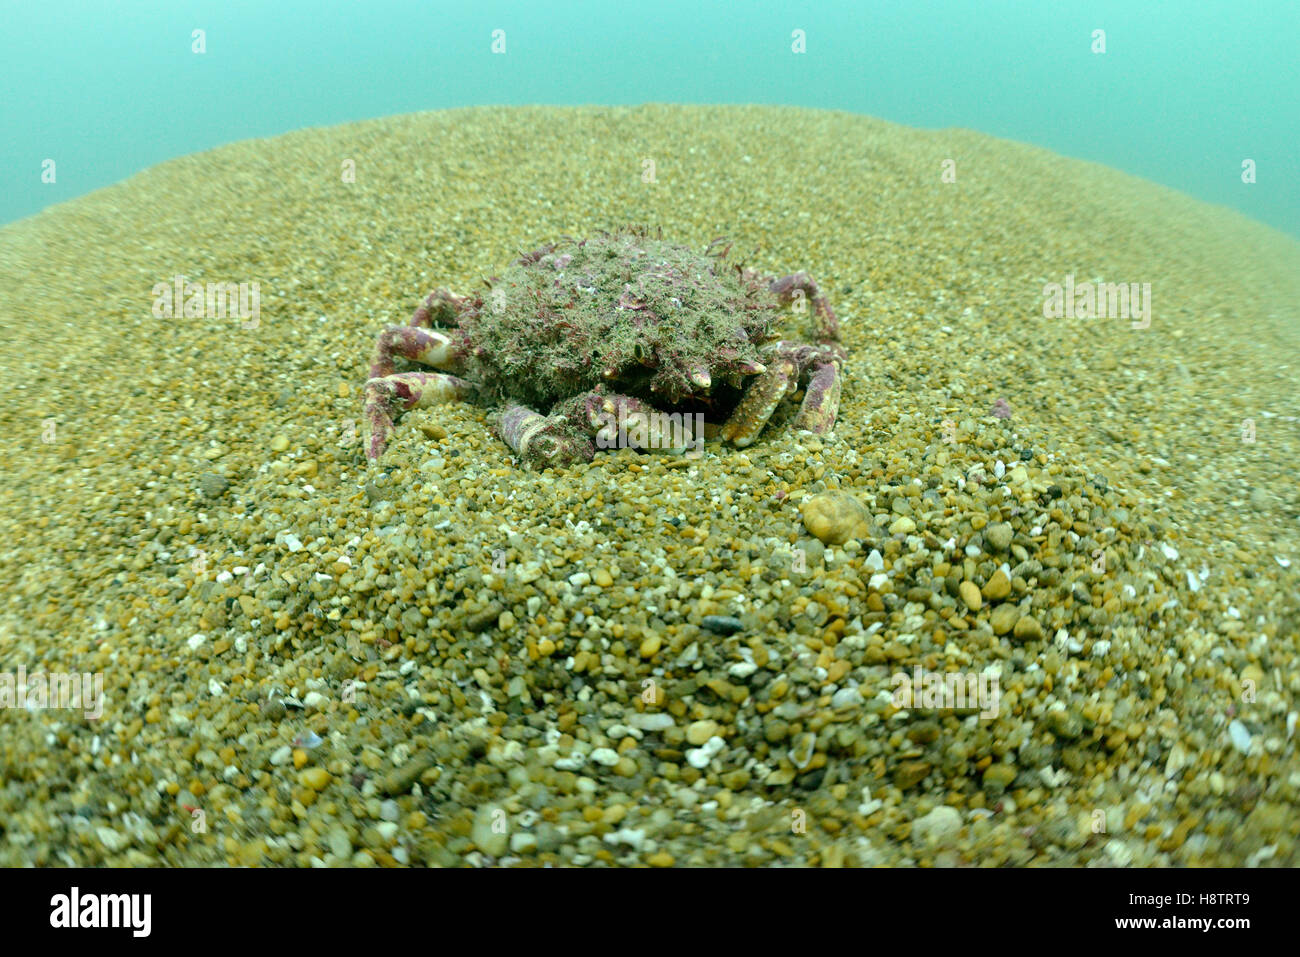 Spider crab (Maja brachydactyla) on sandy bottom around the island of Oléron, Atlantic Ocean, France Stock Photo